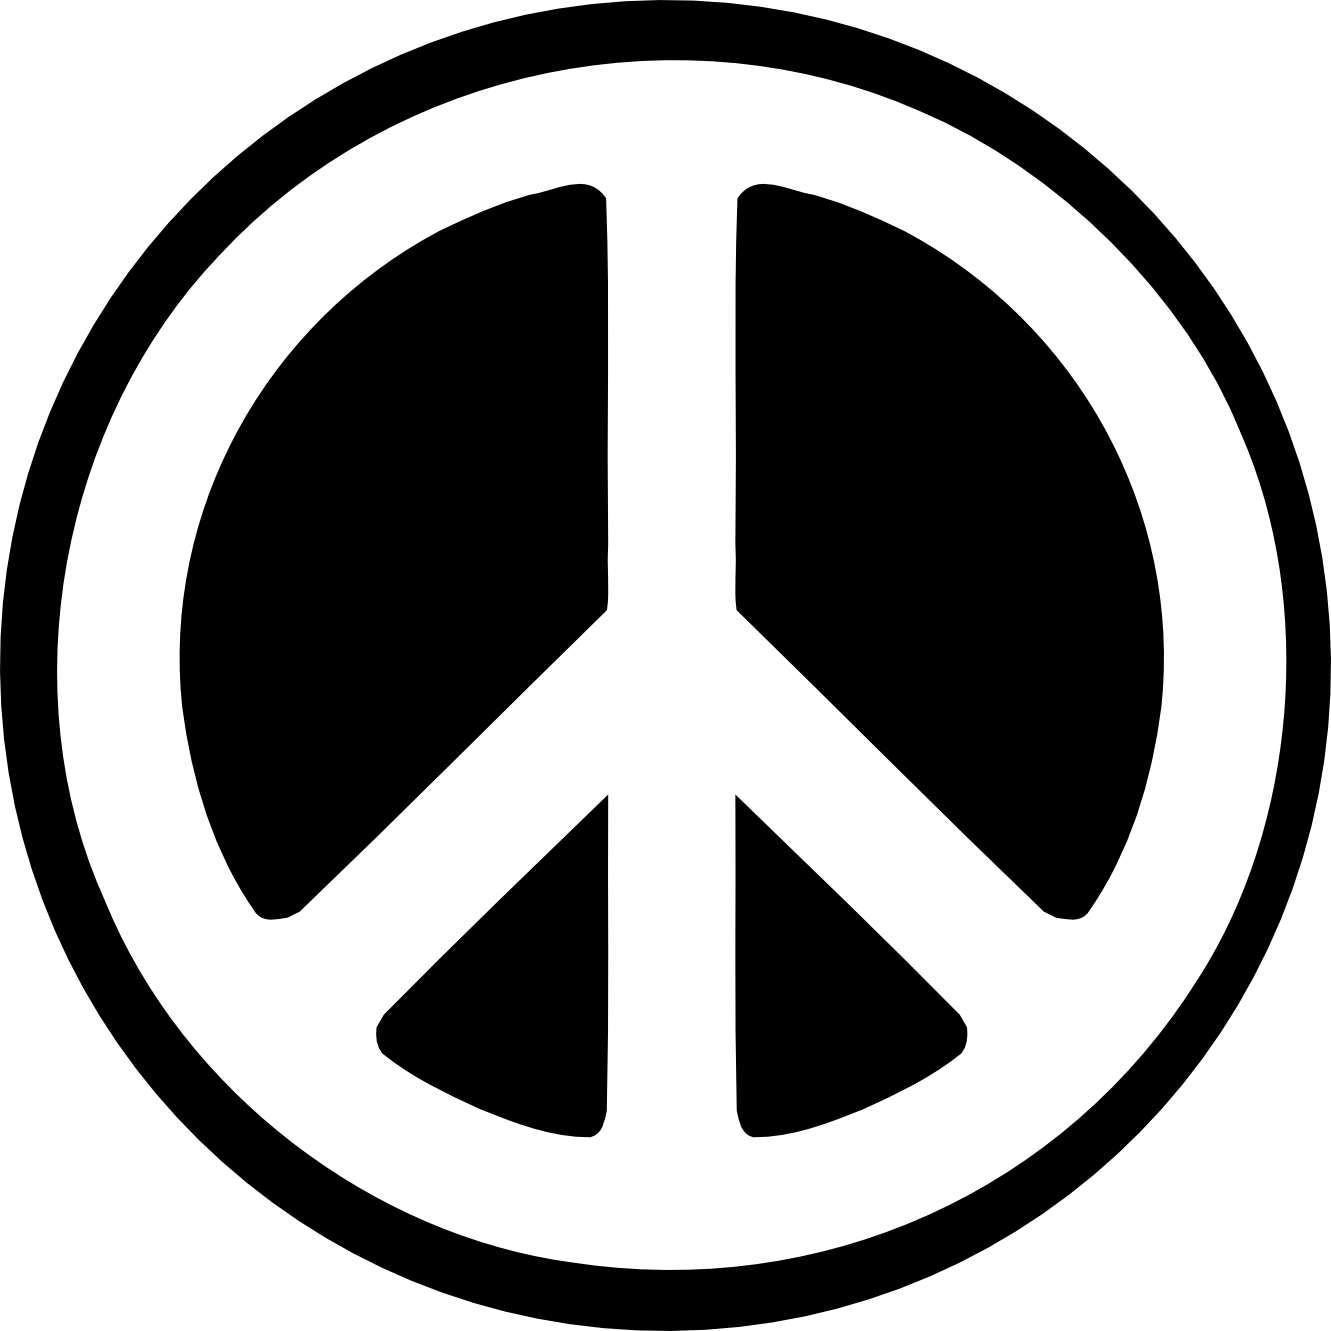 Peace symbol clip art